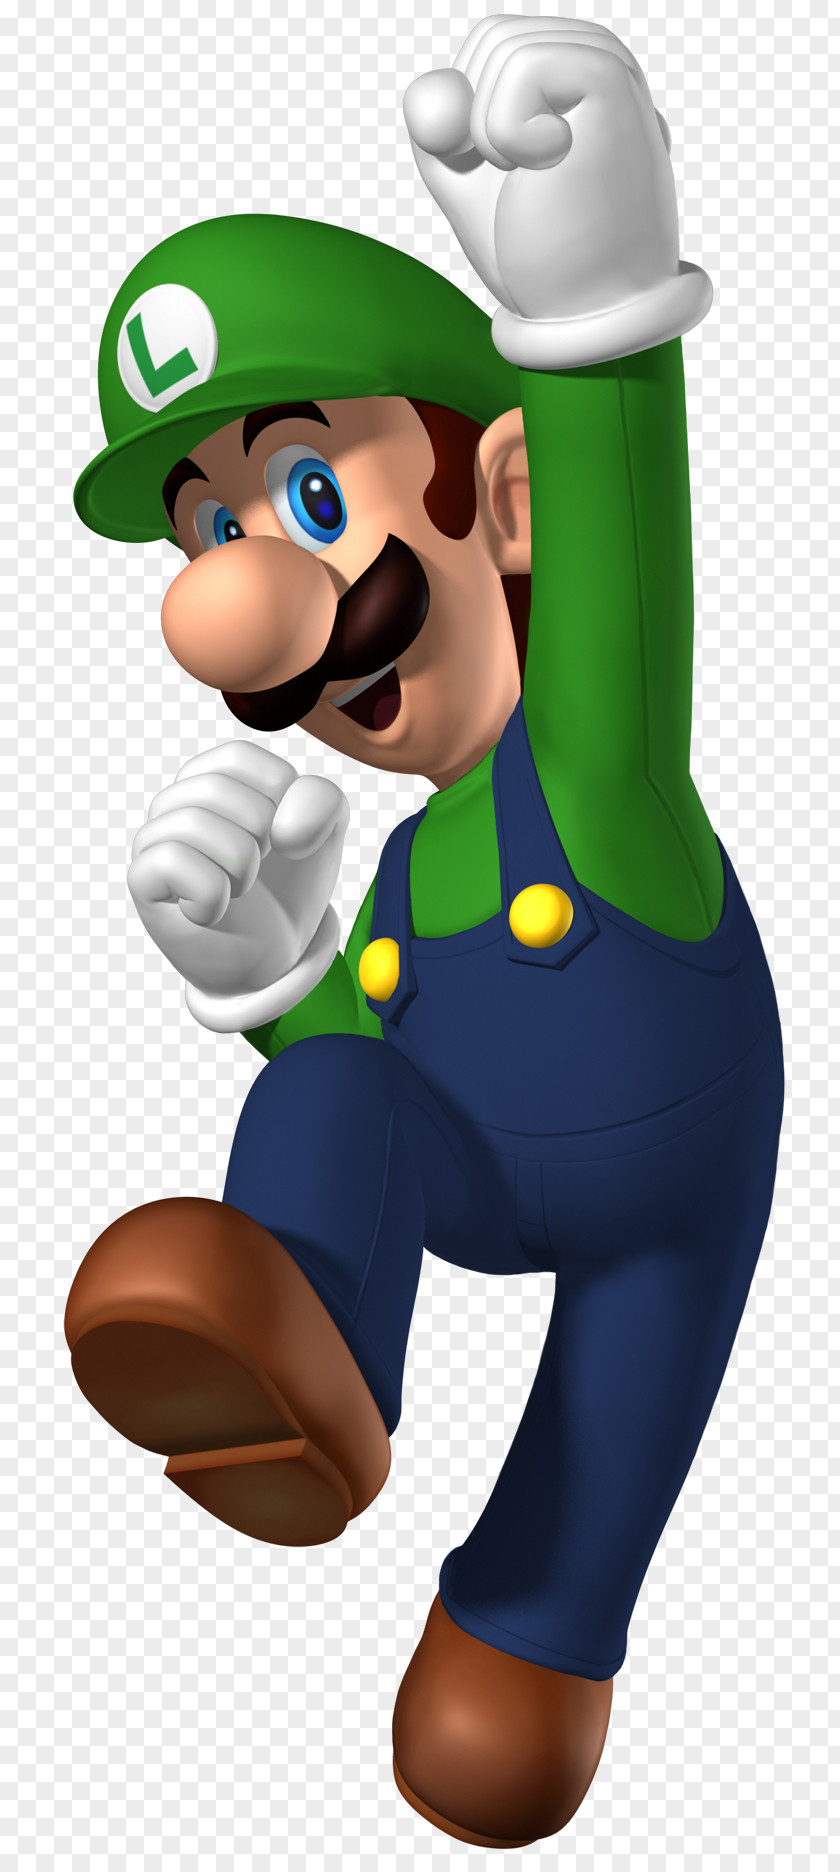 Mario Bros New Super Bros. Luigi PNG